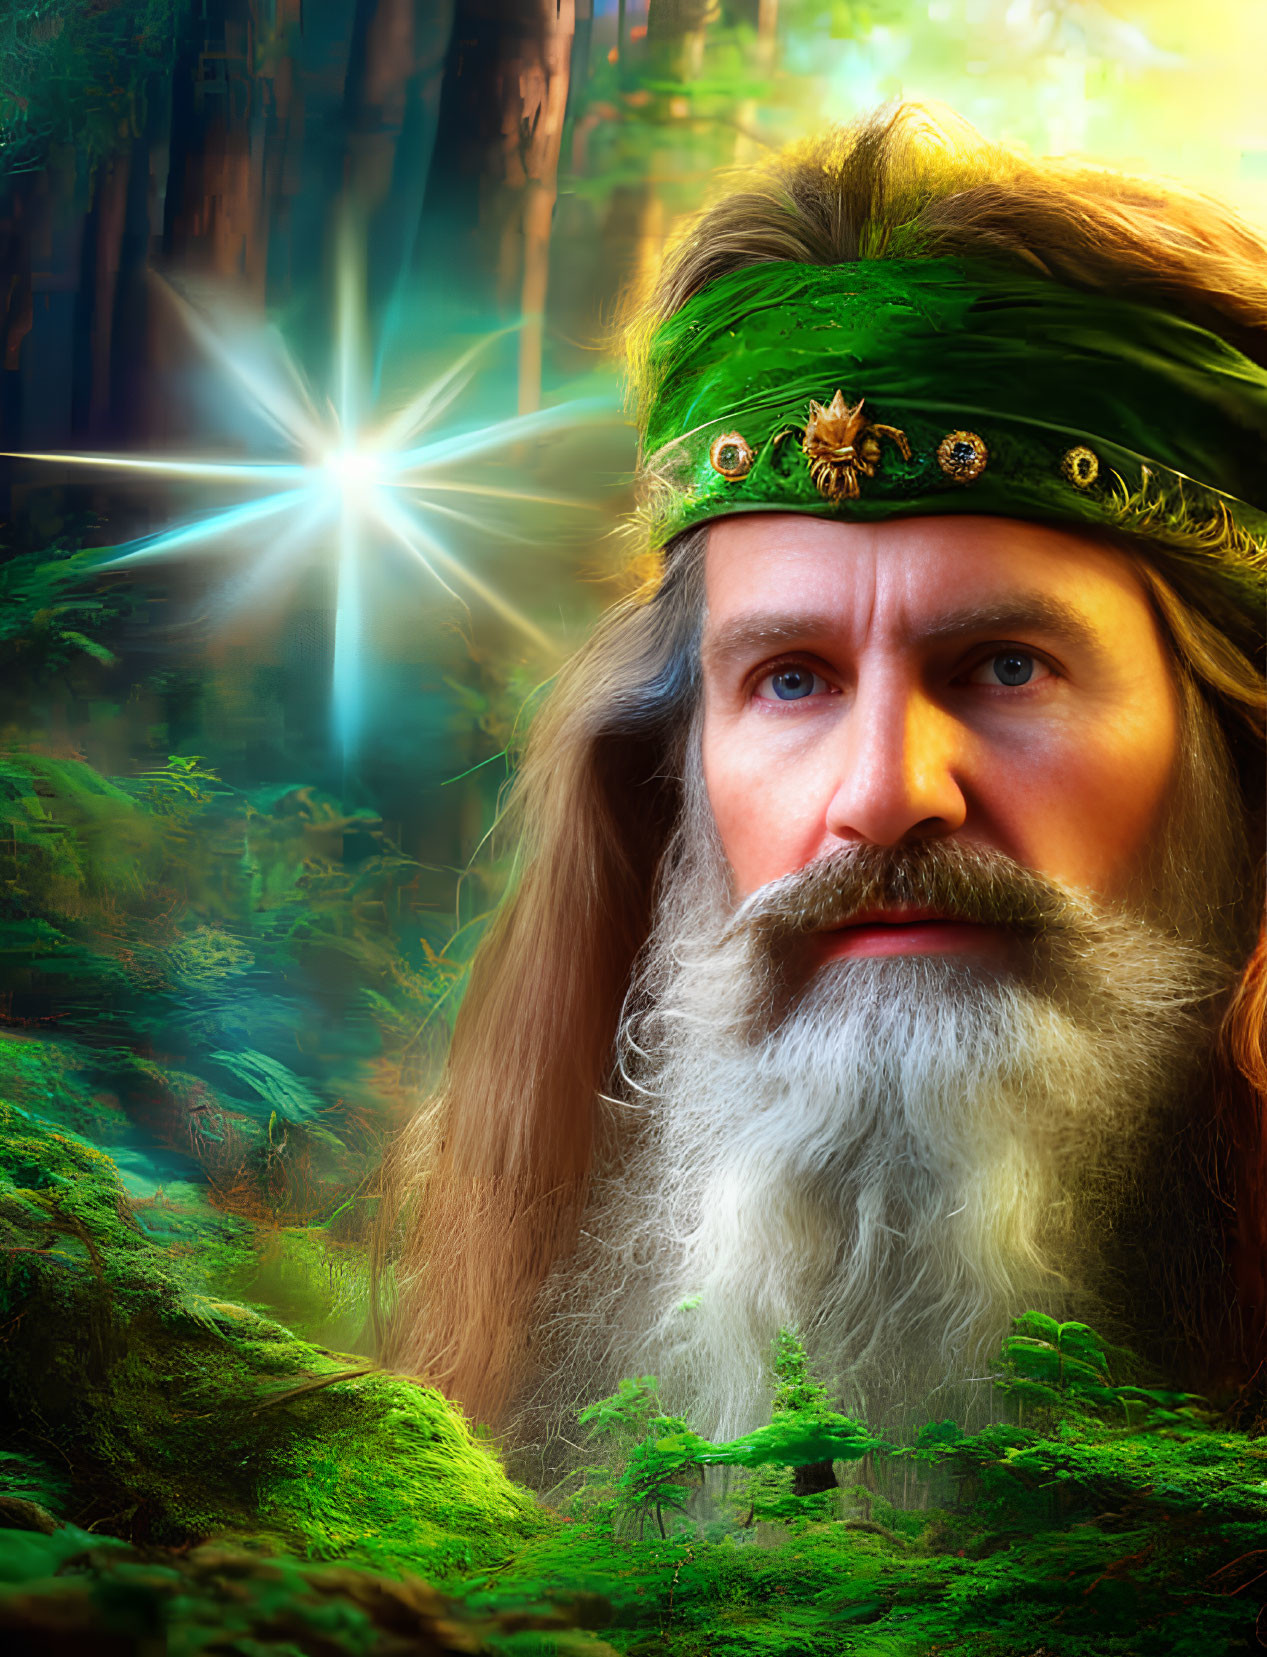 Elderly man with white beard in green headband in mystical forest